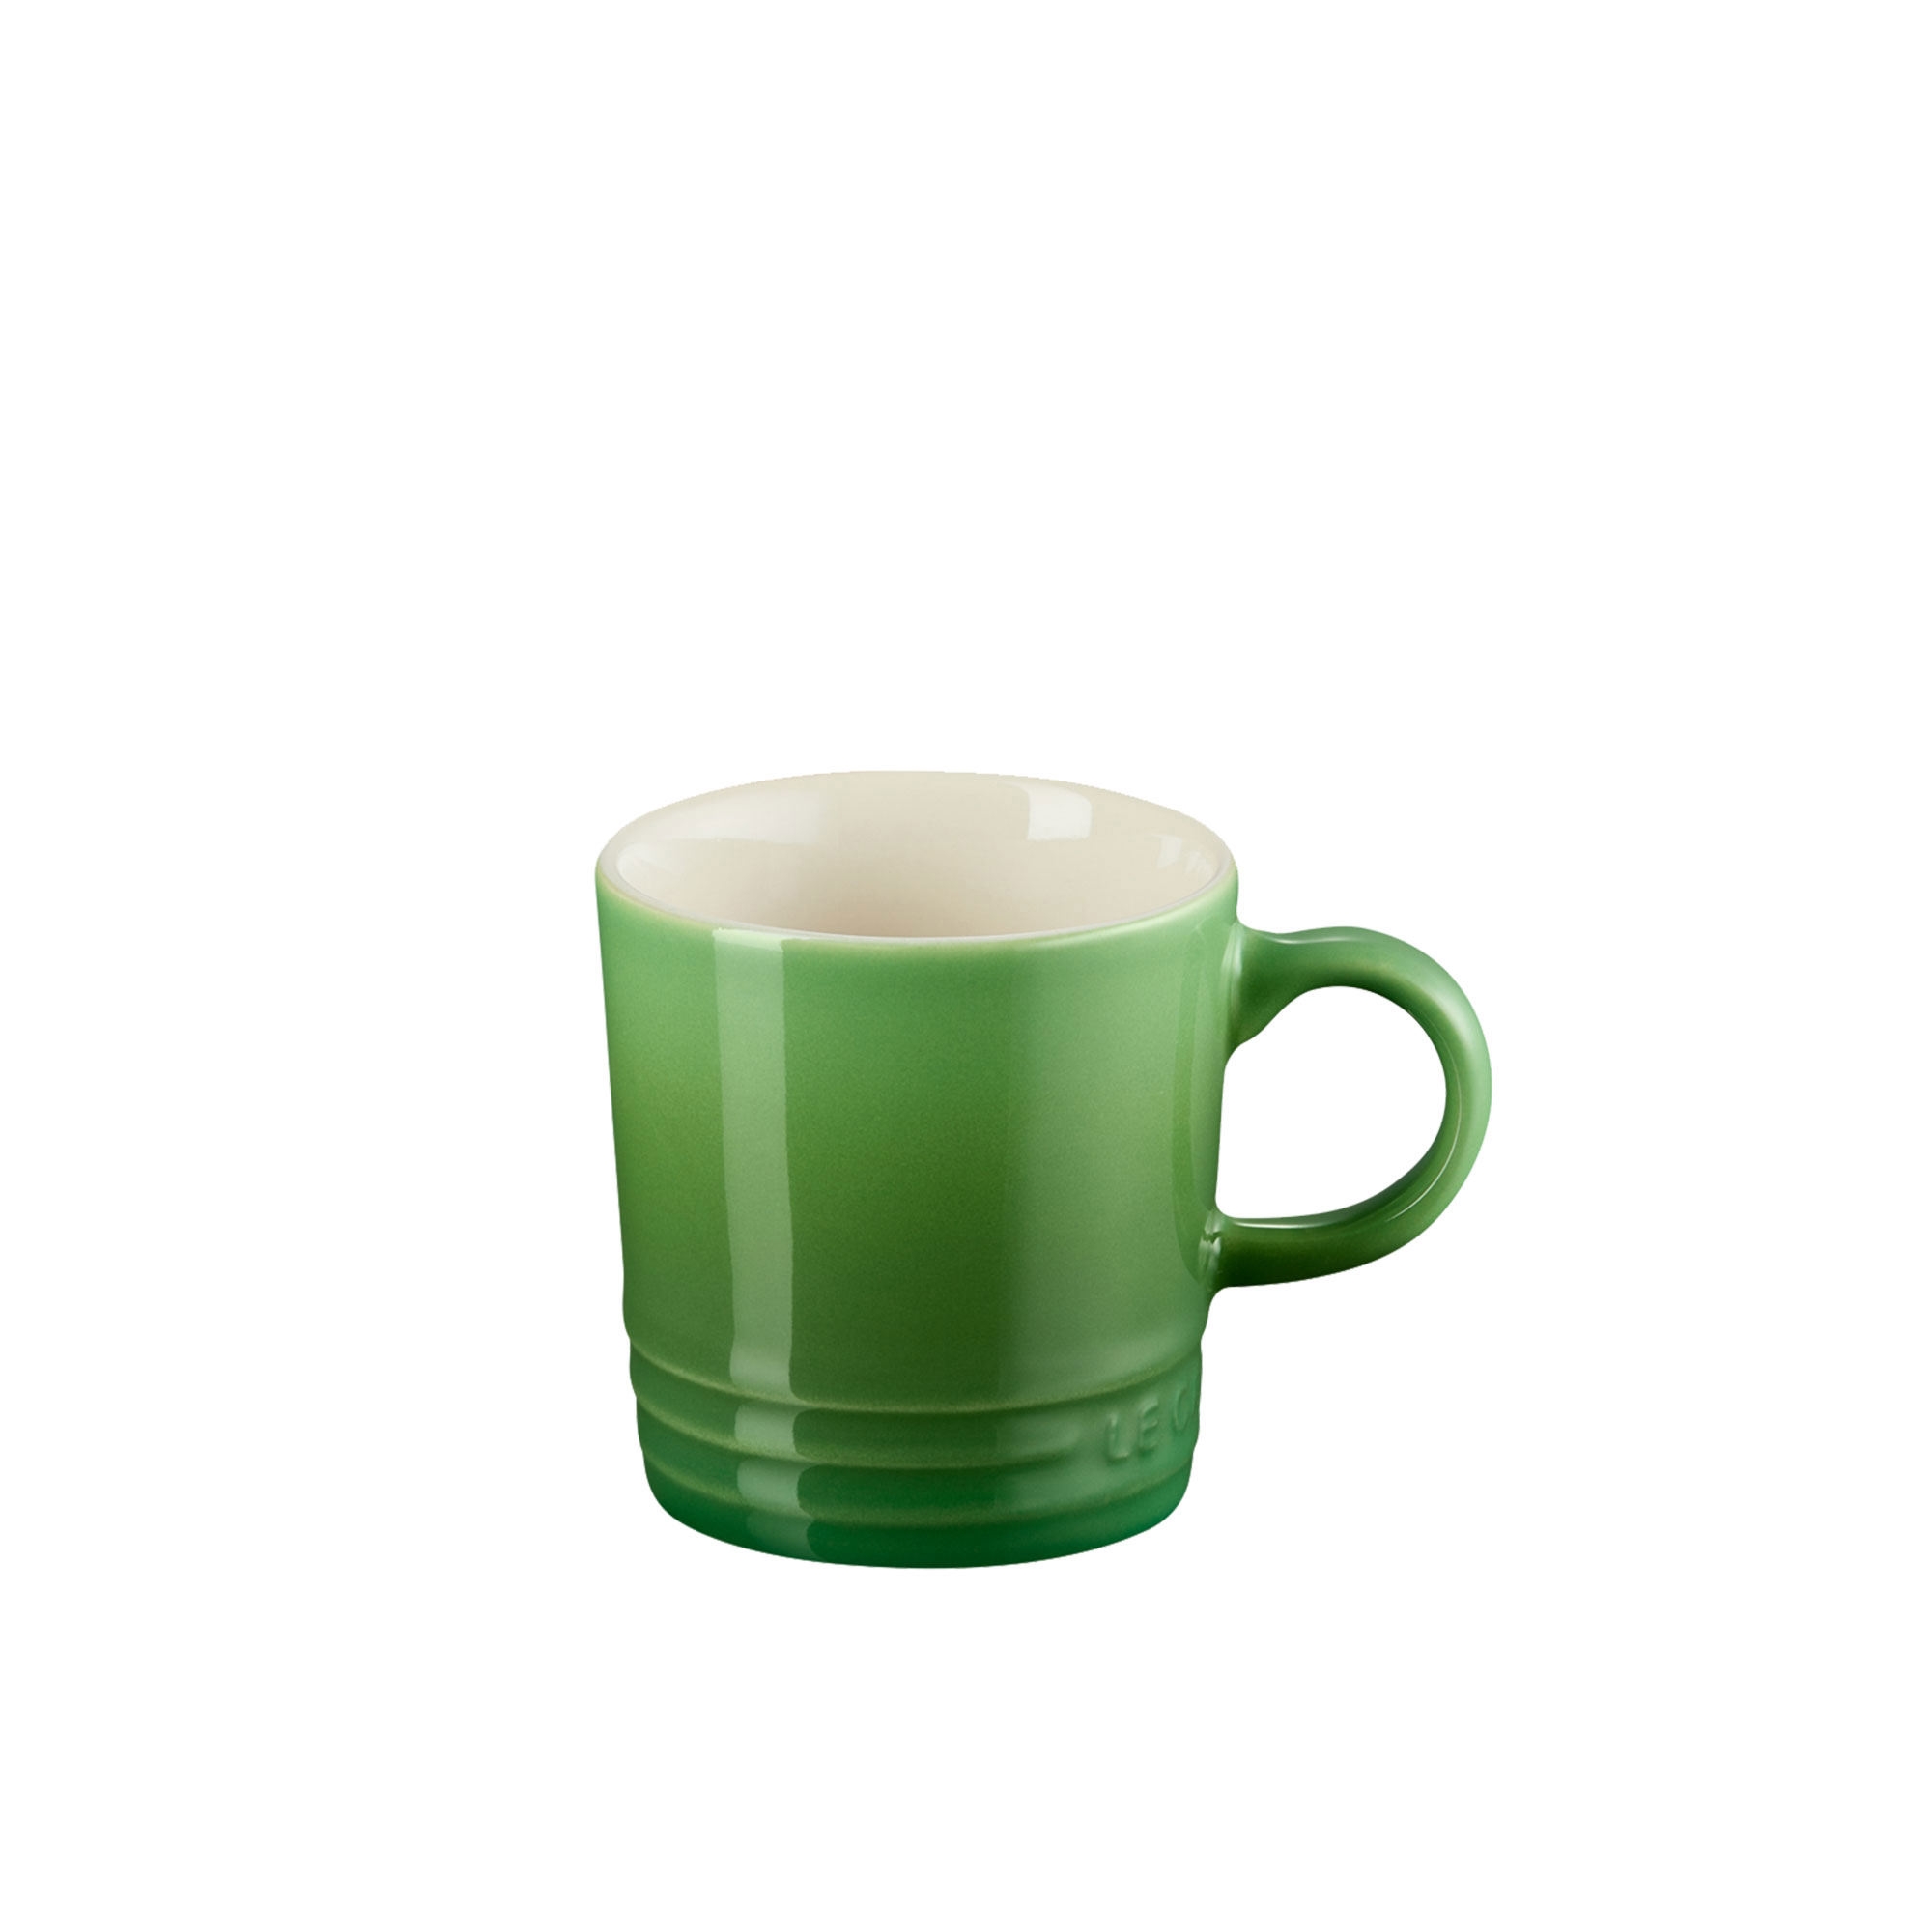 Le Creuset Stoneware Espresso Mug 100ml Bamboo Green Image 1